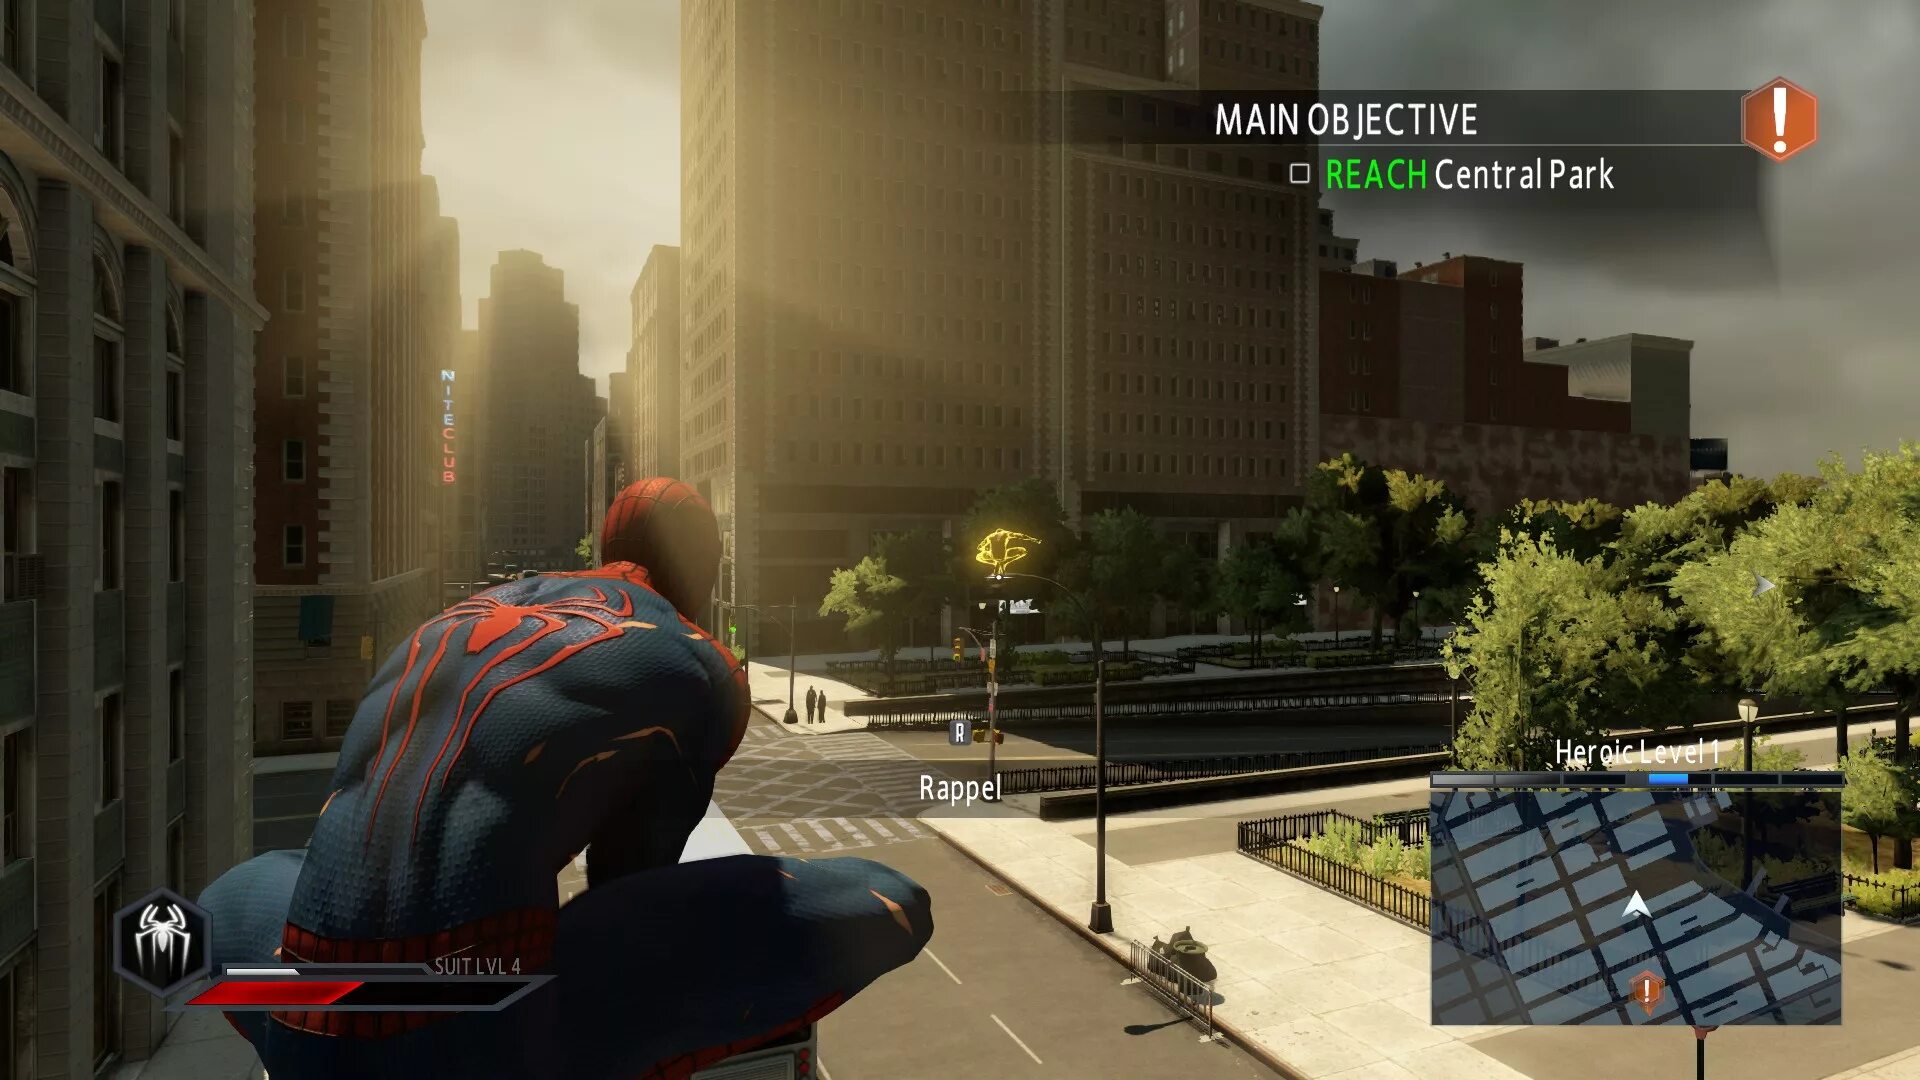 Spider man 2014 игра. The amazing Spider-man (игра, 2012). The amazing Spider-man 2 игра. The amazing Spider-man 2 геймплей. Человек паук амазинг игра.